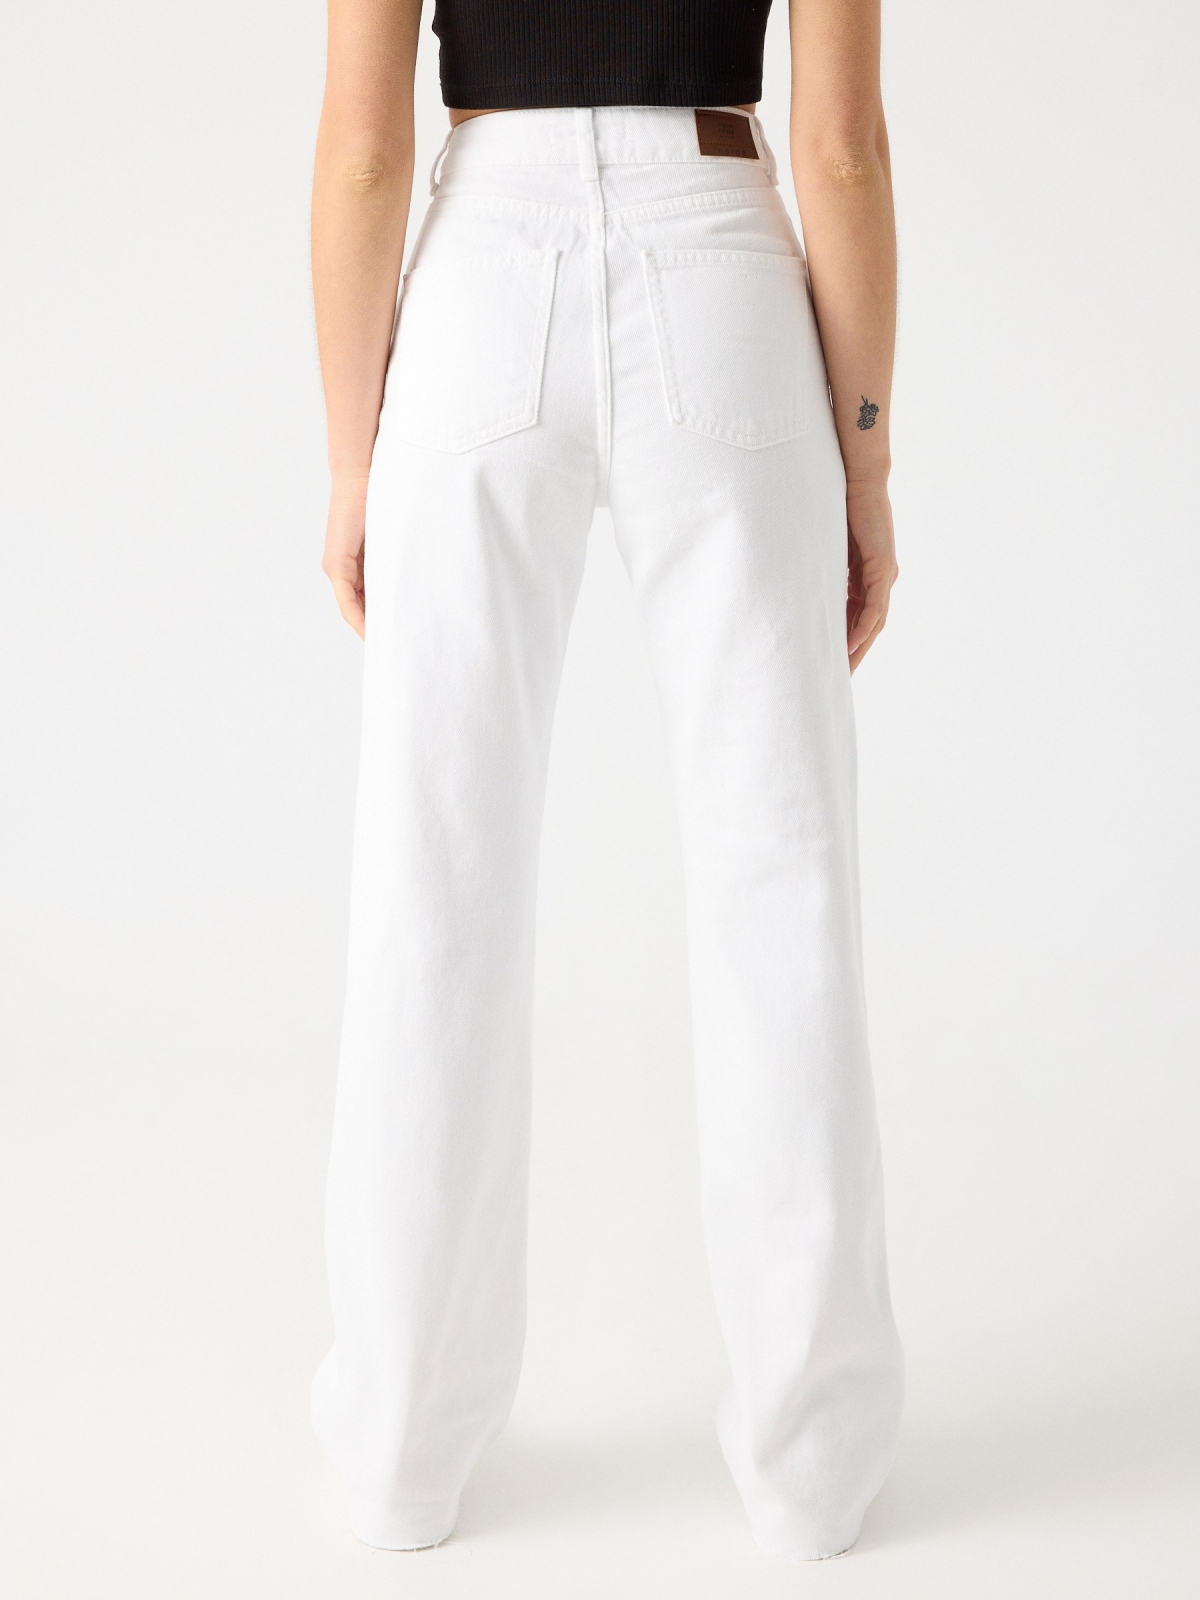 Jeans wide leg cinco bolsillos blanco vista media trasera